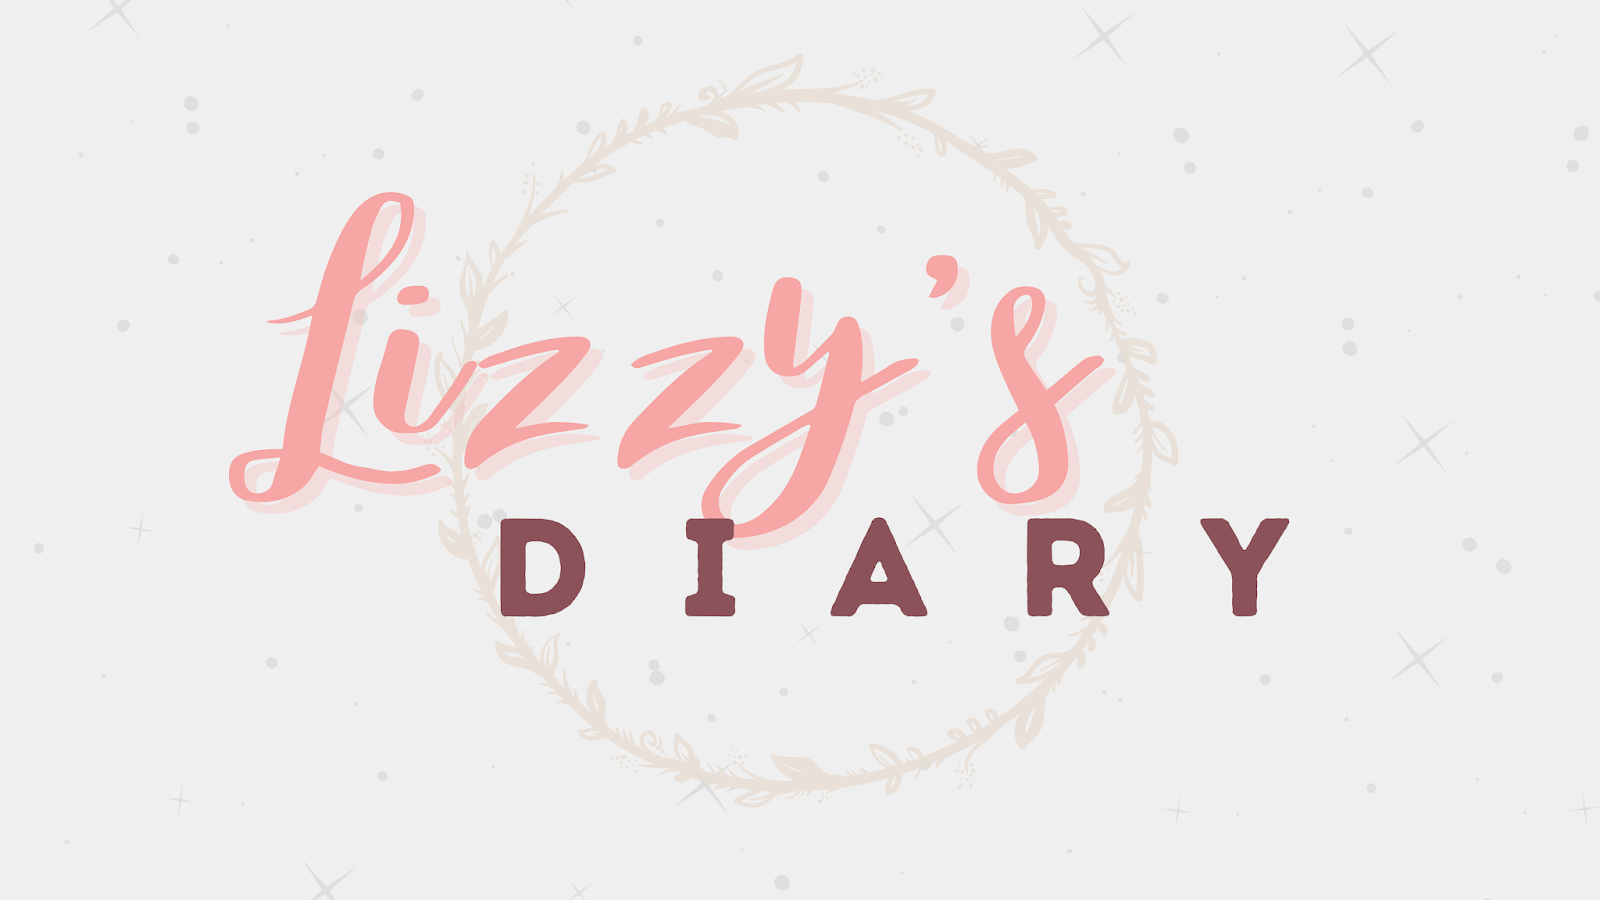 Lizzy's Diary